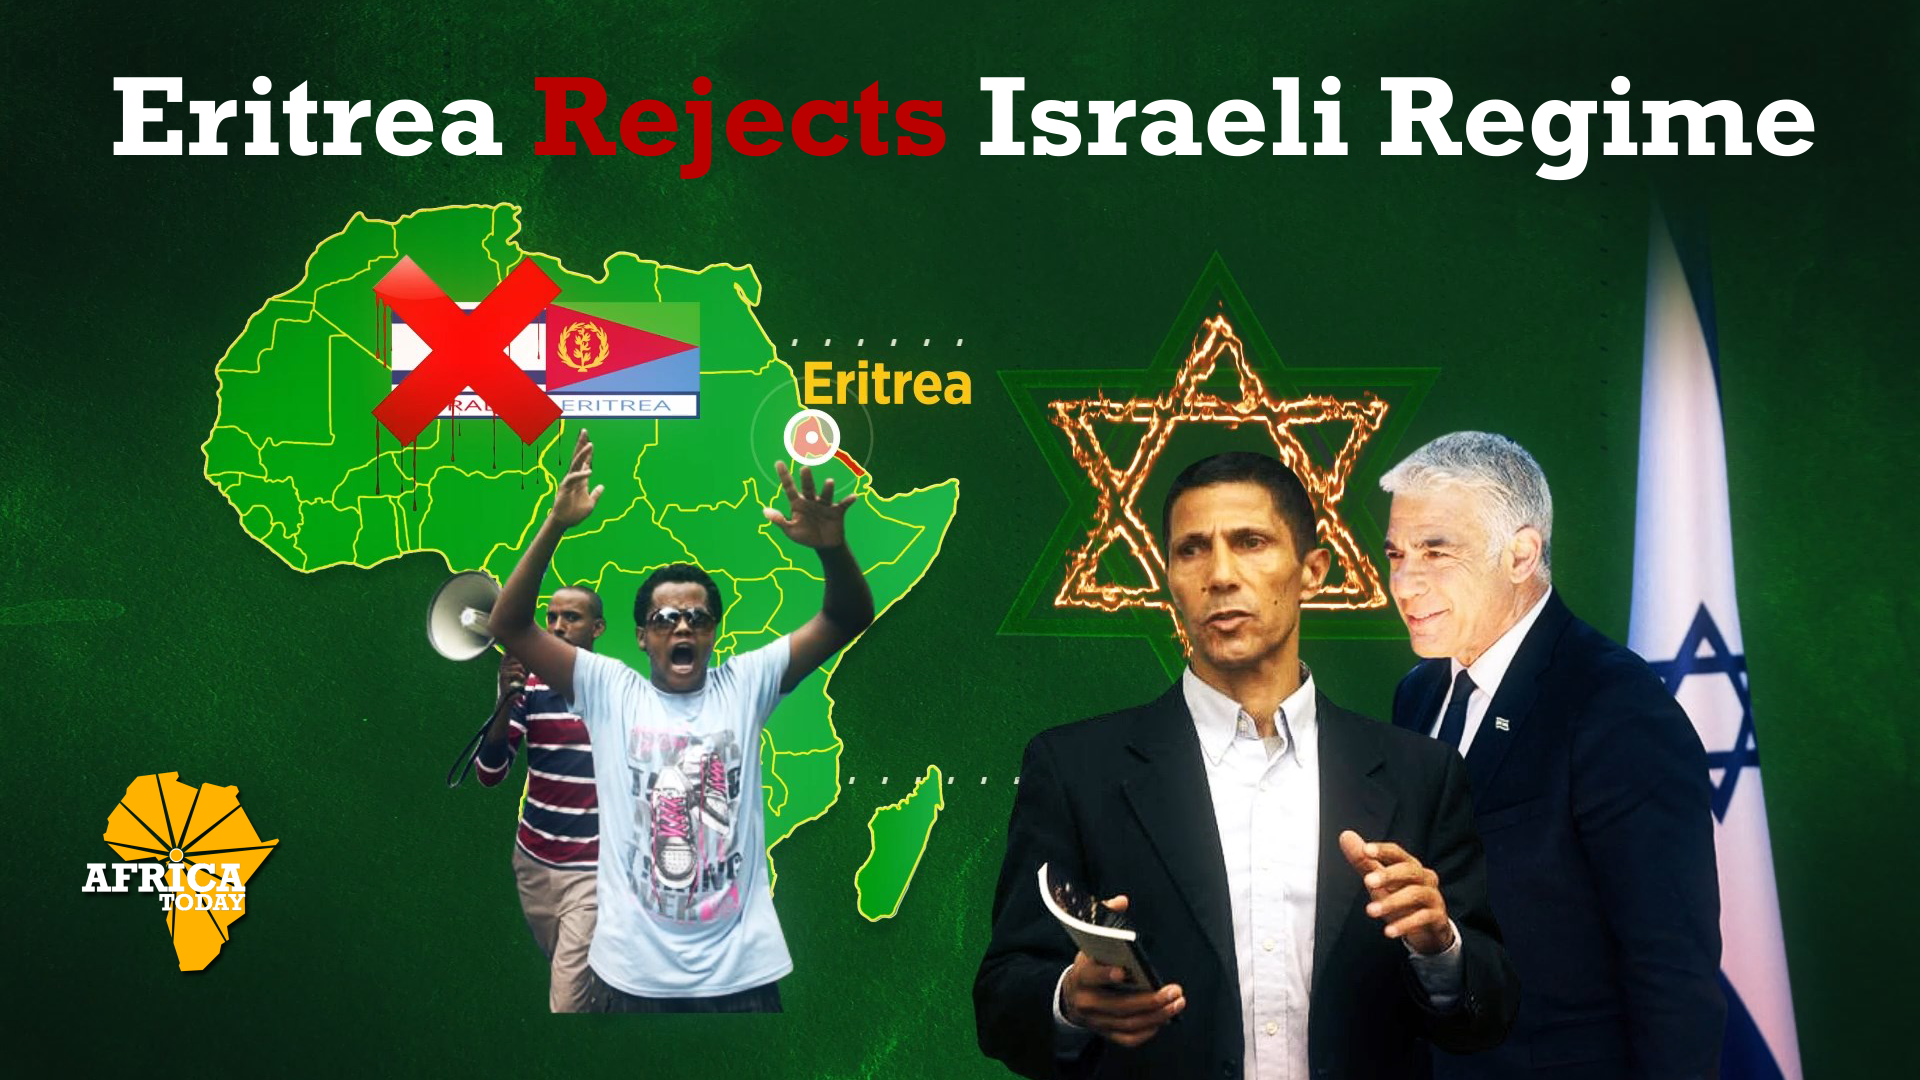 Eritrea rejects Israeli regime